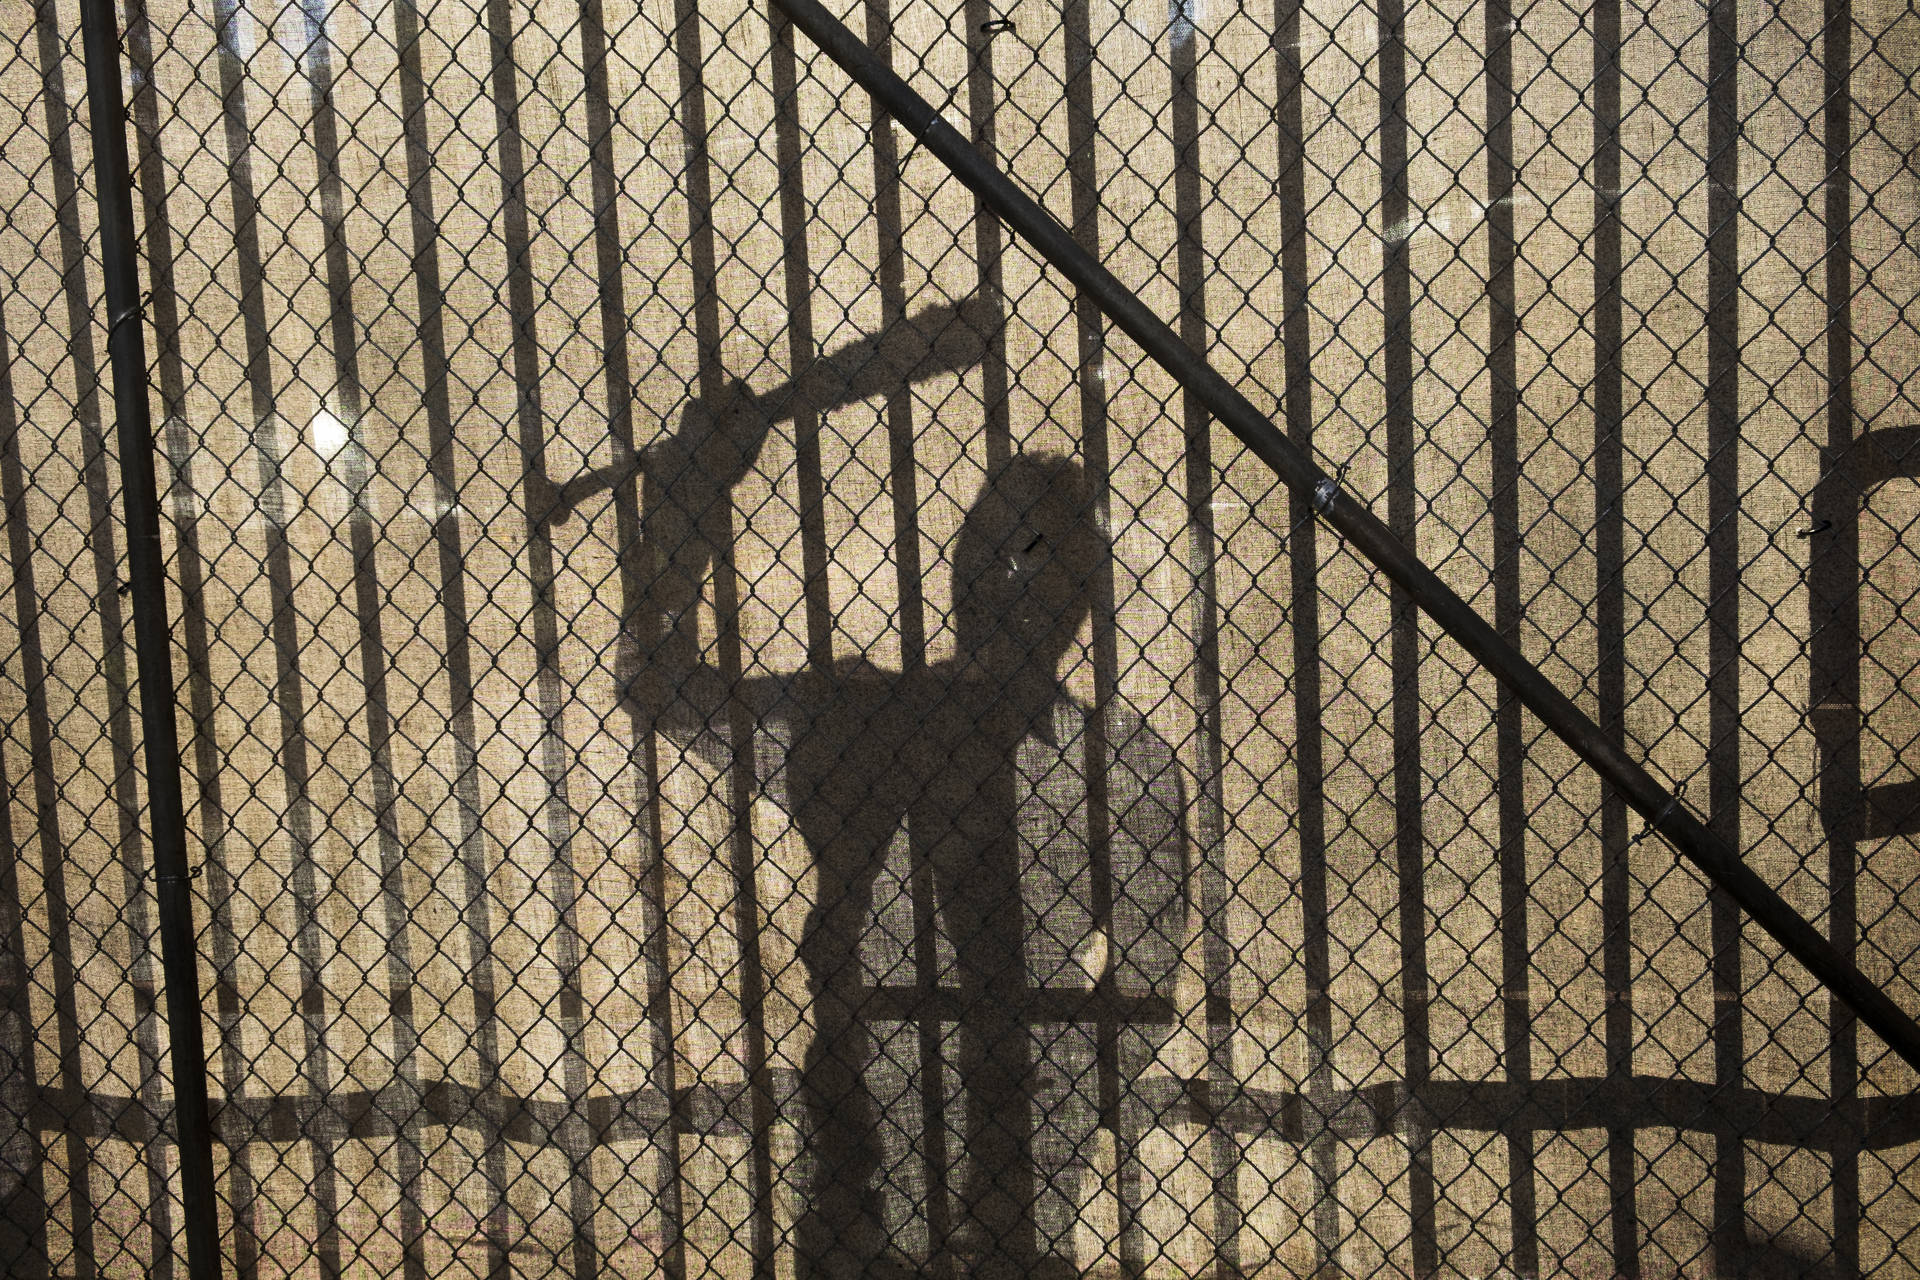 Negan's Shadow Against A Fence